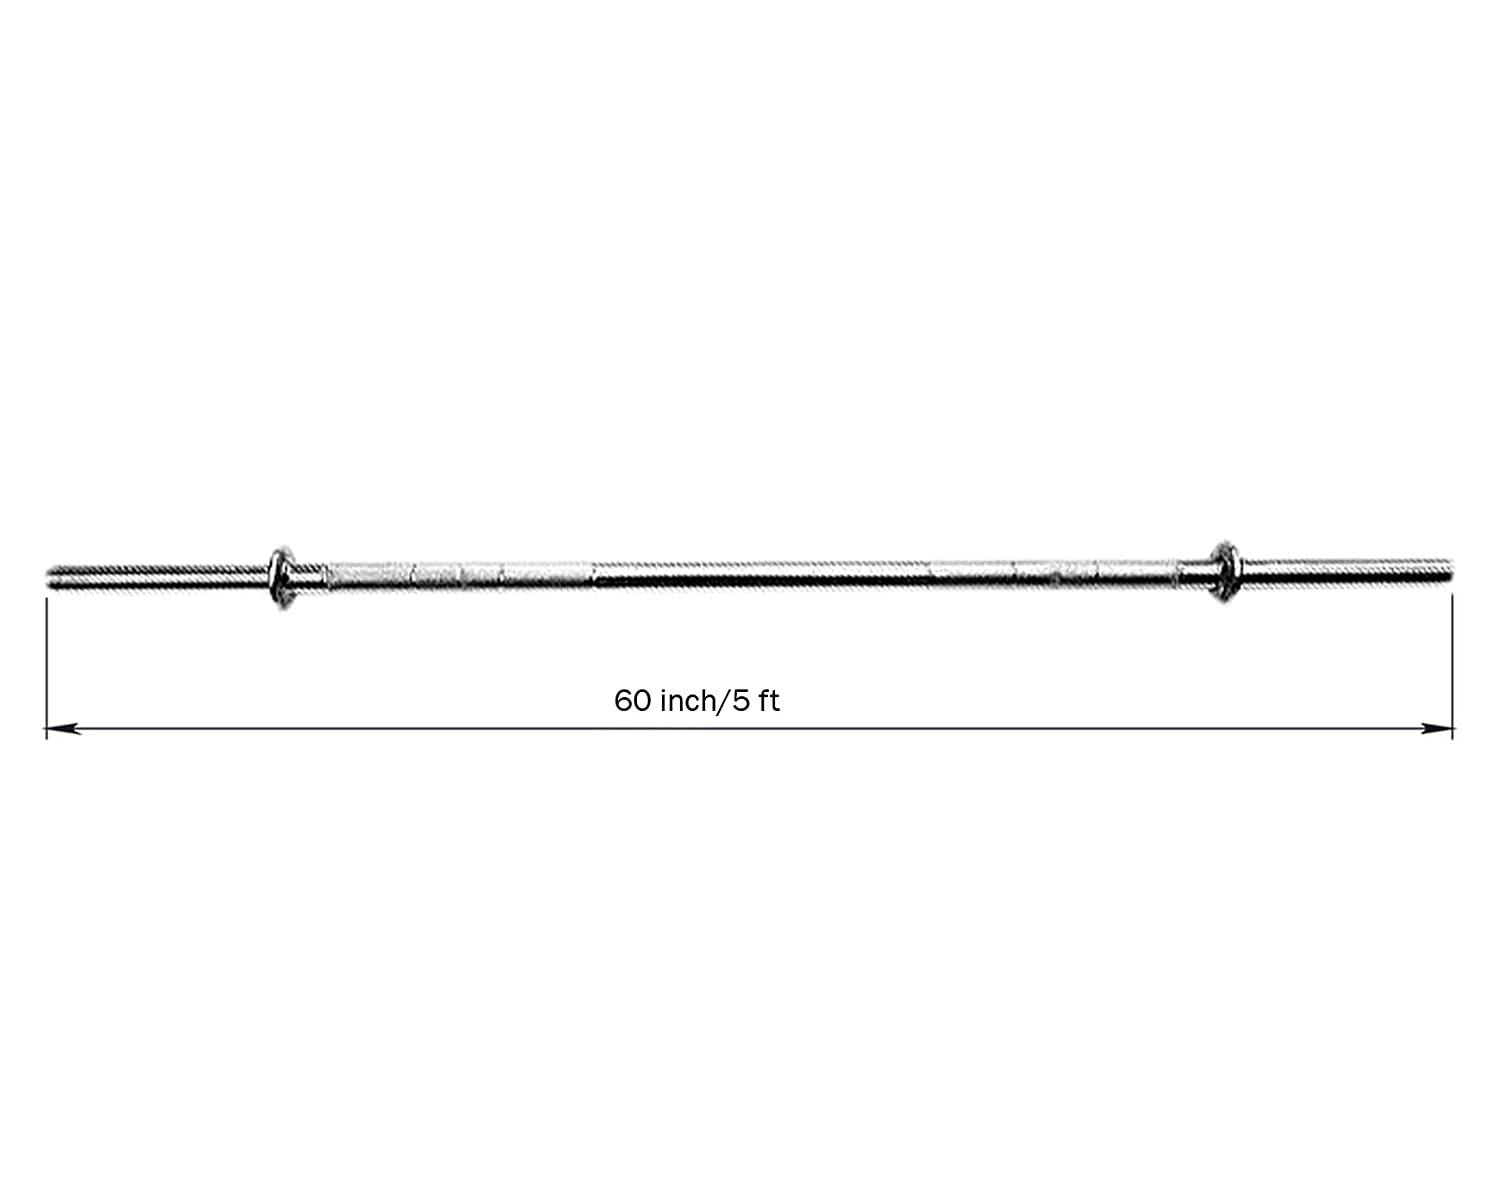 Prokick 5 ft (60 inch) Straight Bar Bell Rod - Best Price online Prokicksports.com